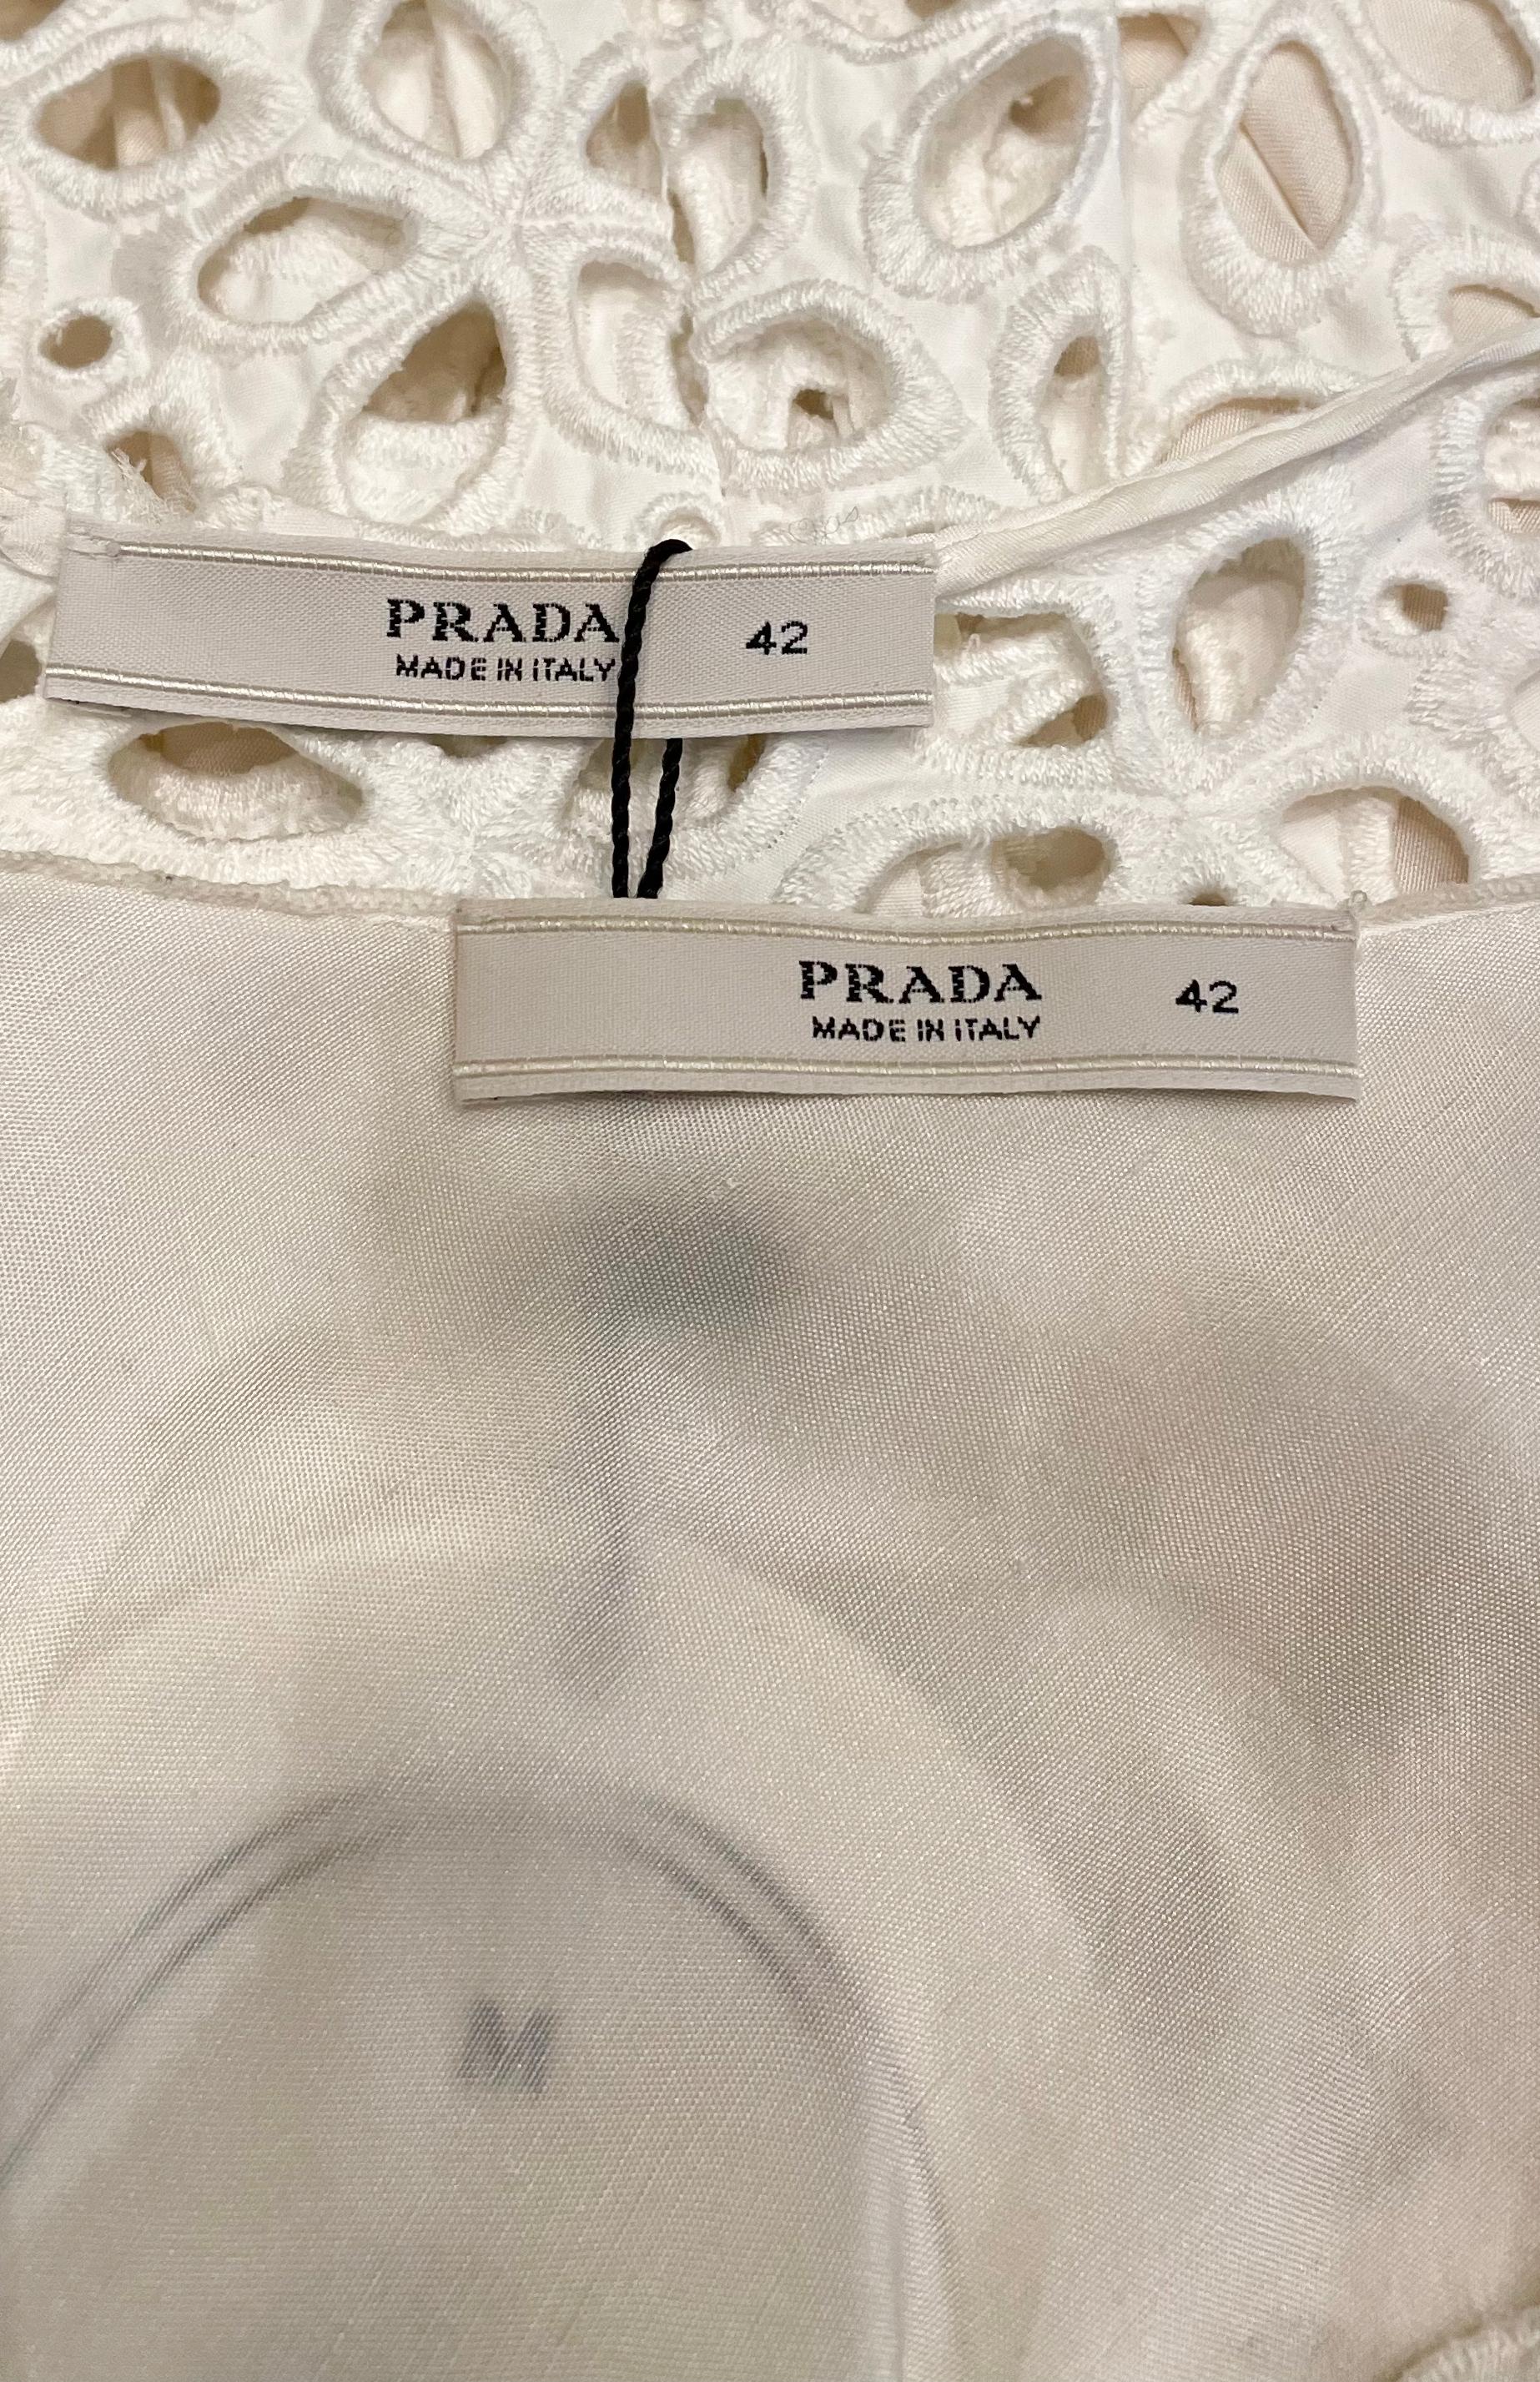 Mini robe en crochet Off-White avec collier en cristal, Prada, 2014  2